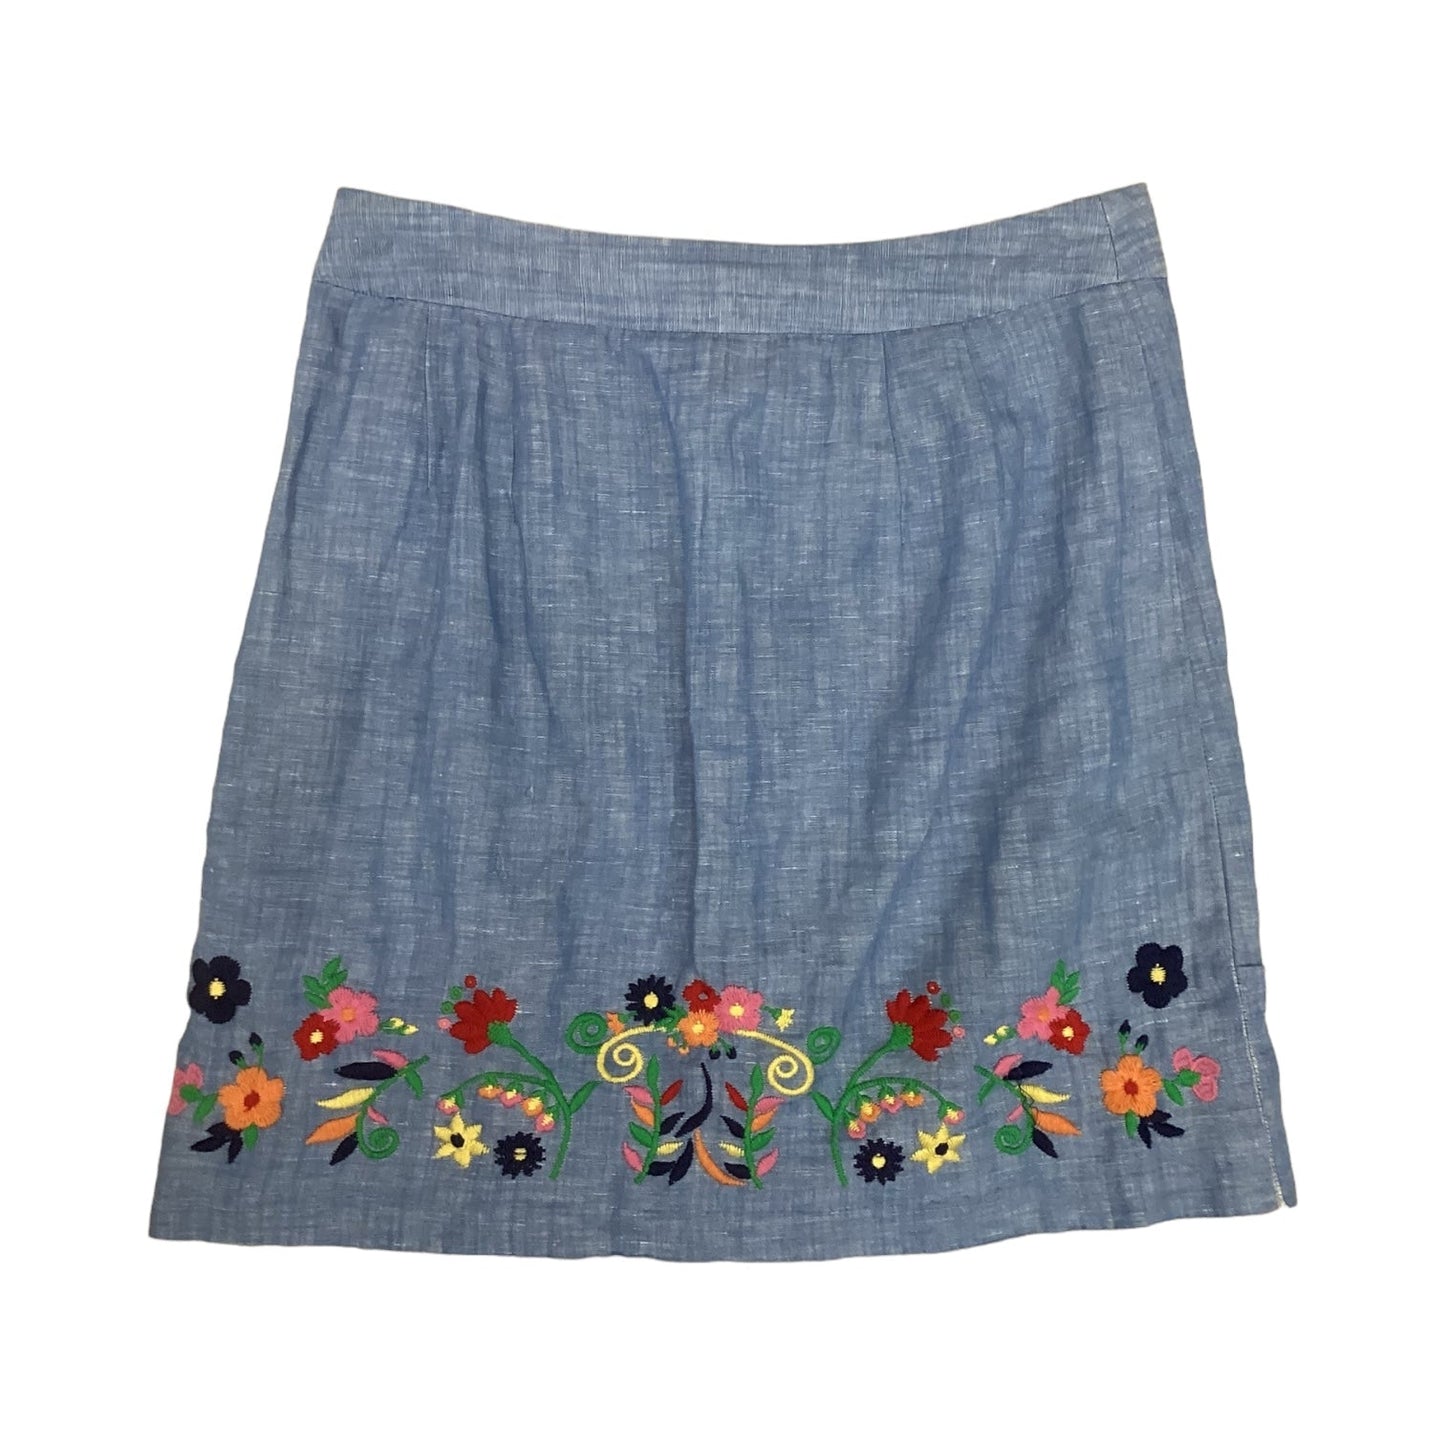 Skirt Mini & Short By Talbots  Size: 2